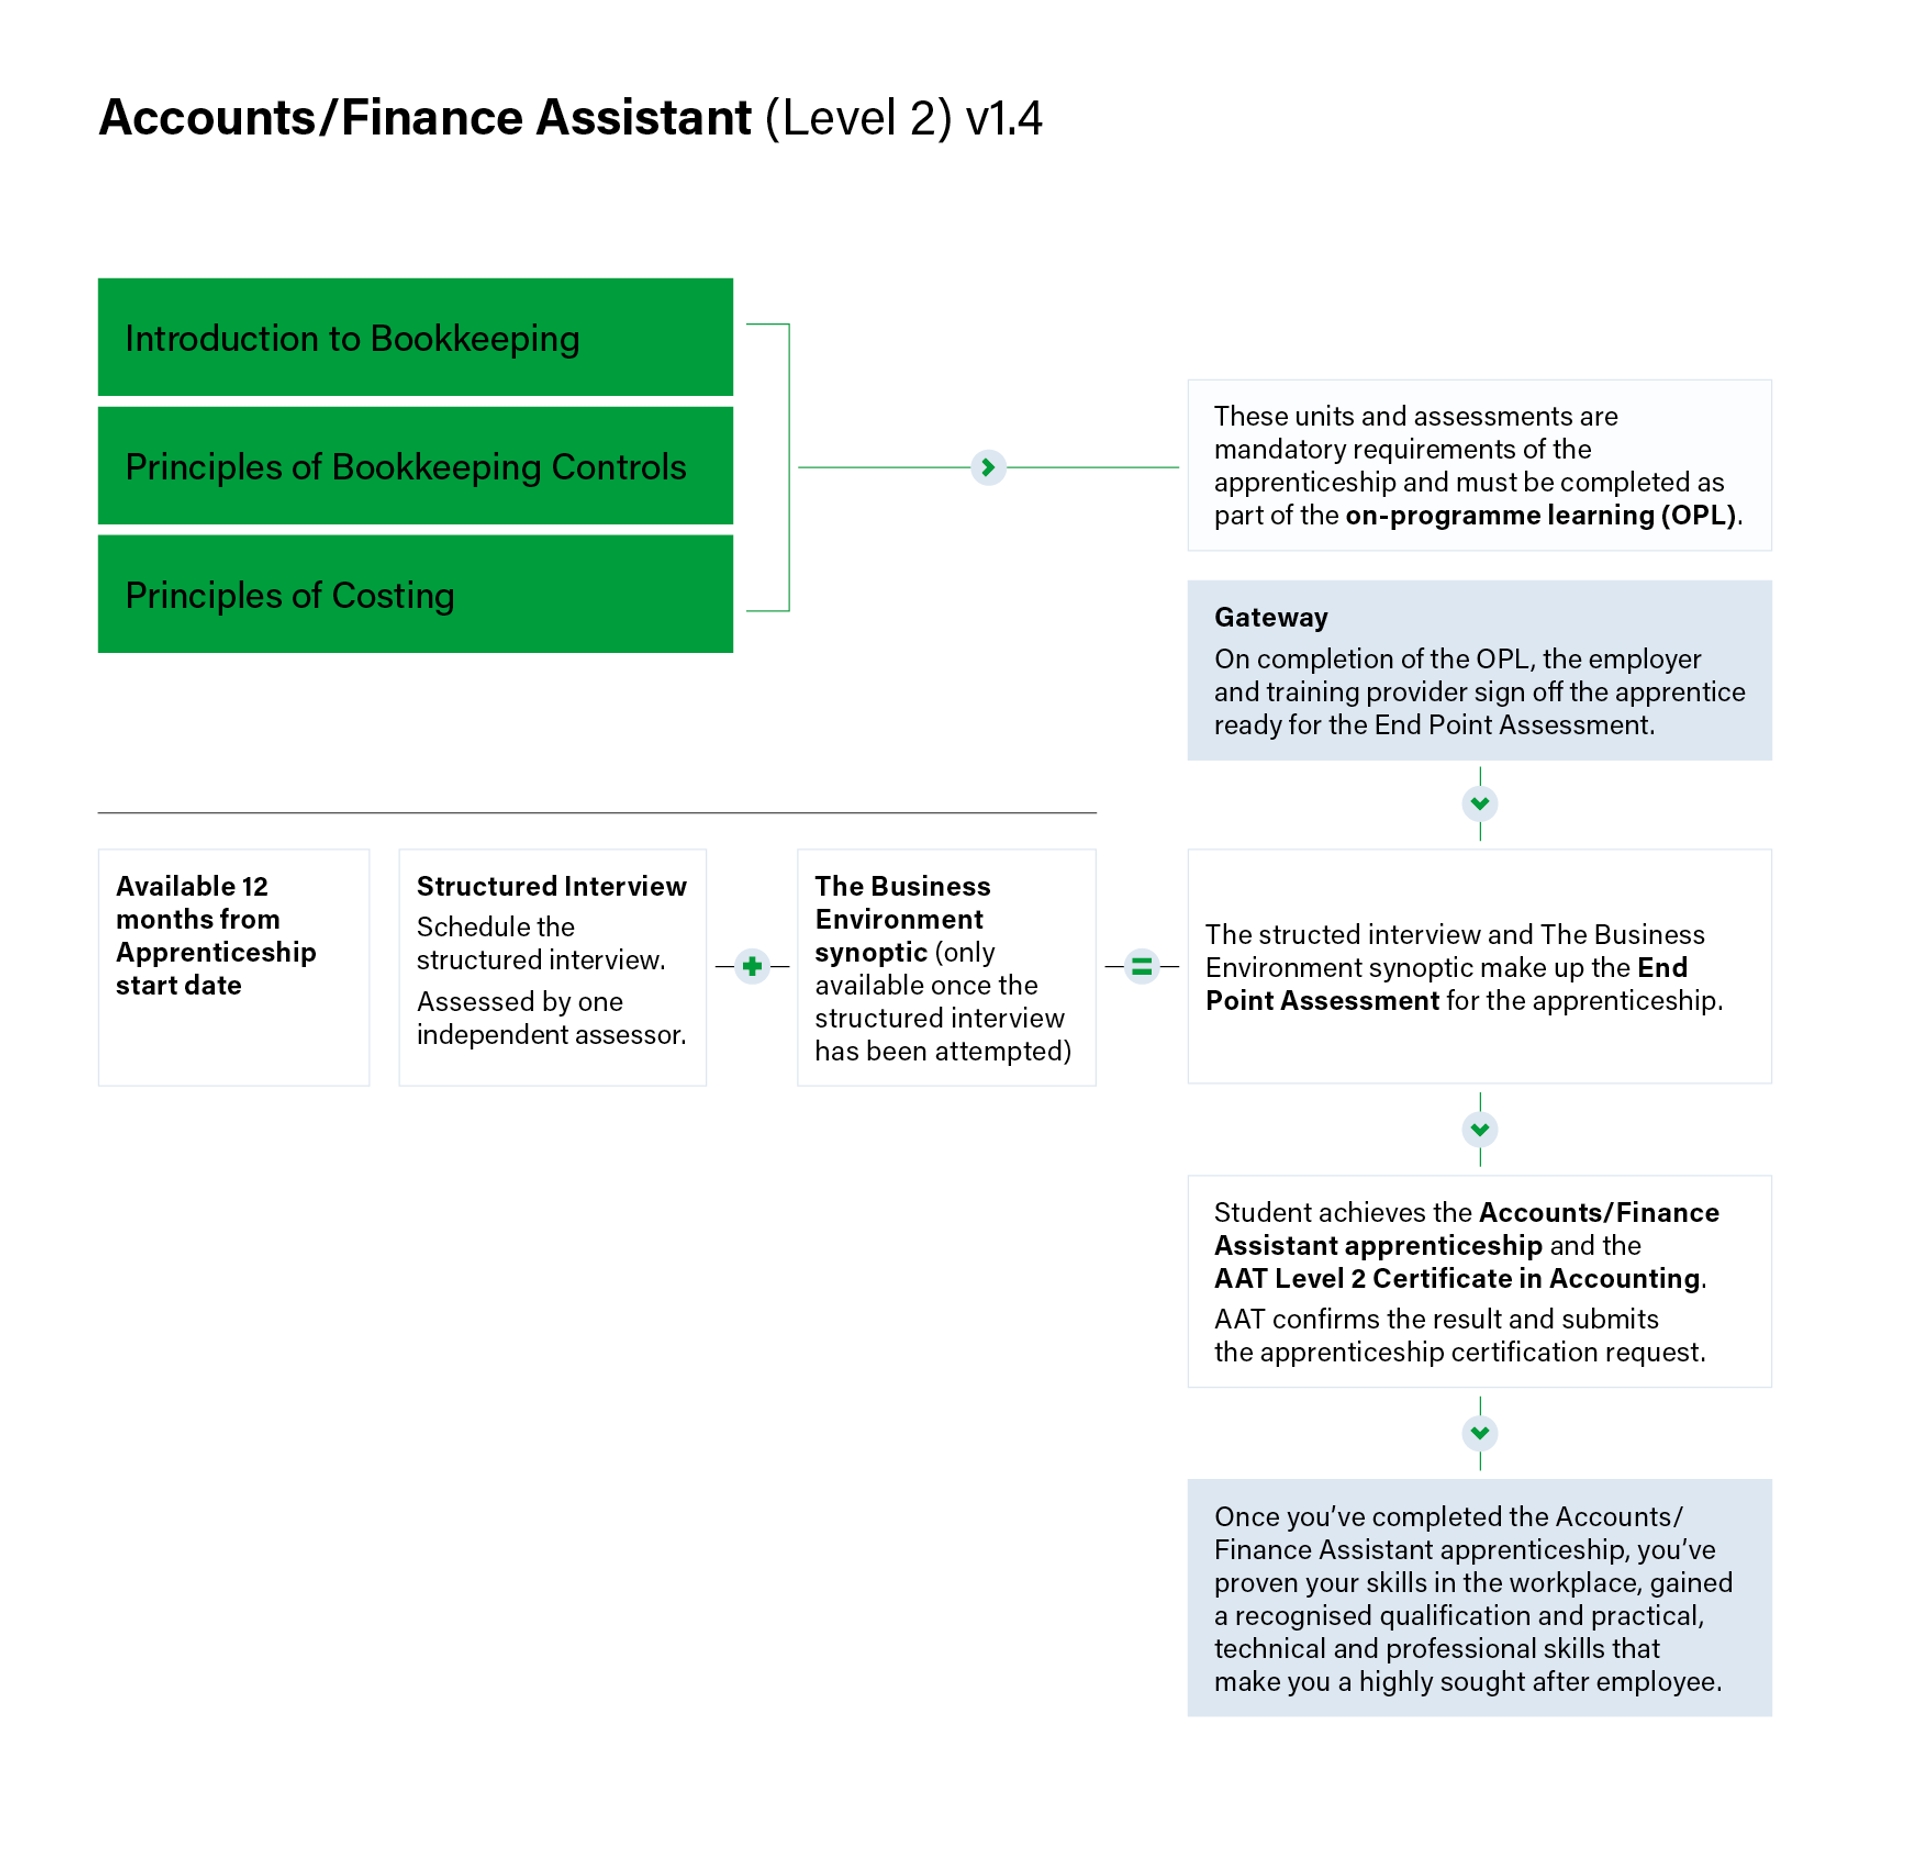 Accounts/Finance Assistant apprenticeship EPA pathway v1.4